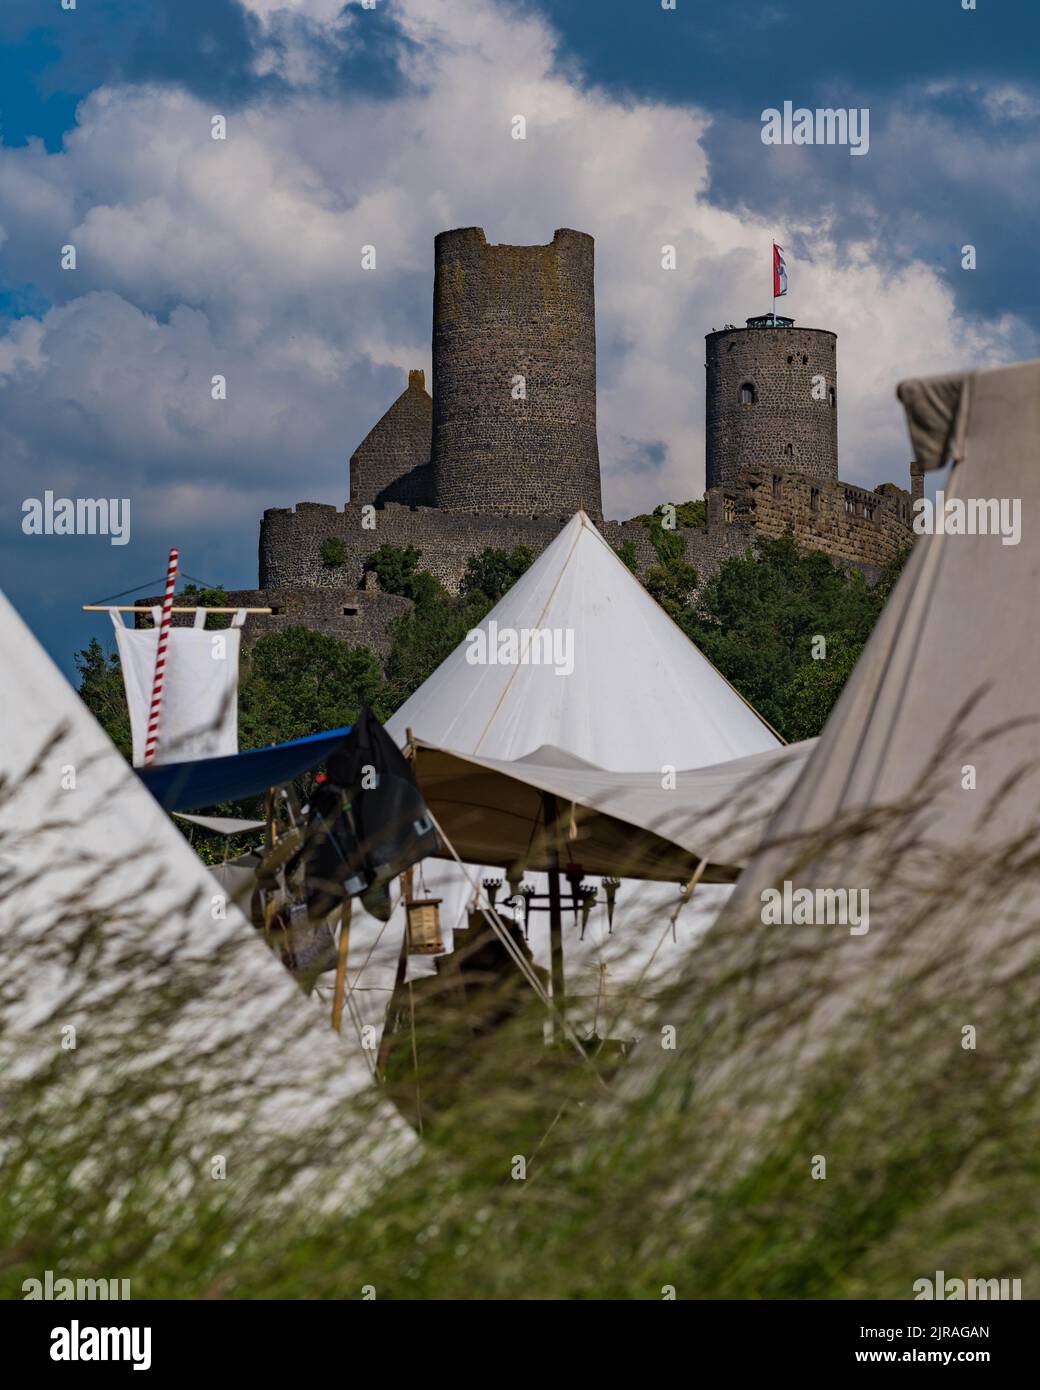 Un colpo verticale di tende e capanne vicino al Castello di Munzenberg a Wetteraukreis, Assia, Germania Foto Stock